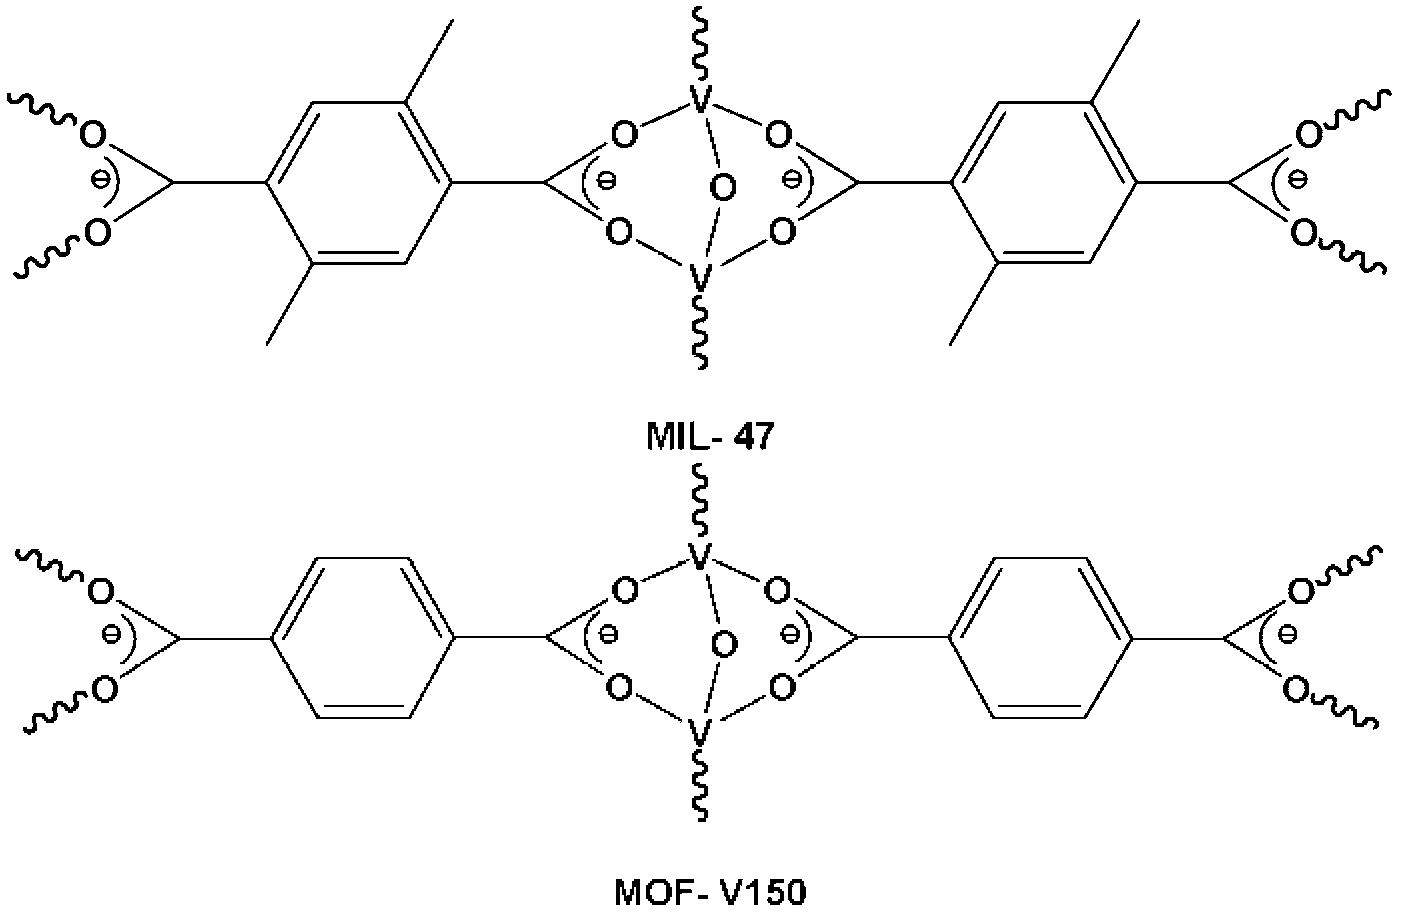 Functionalization of organic molecules using metal-organic frameworks (mofs) as catalysts